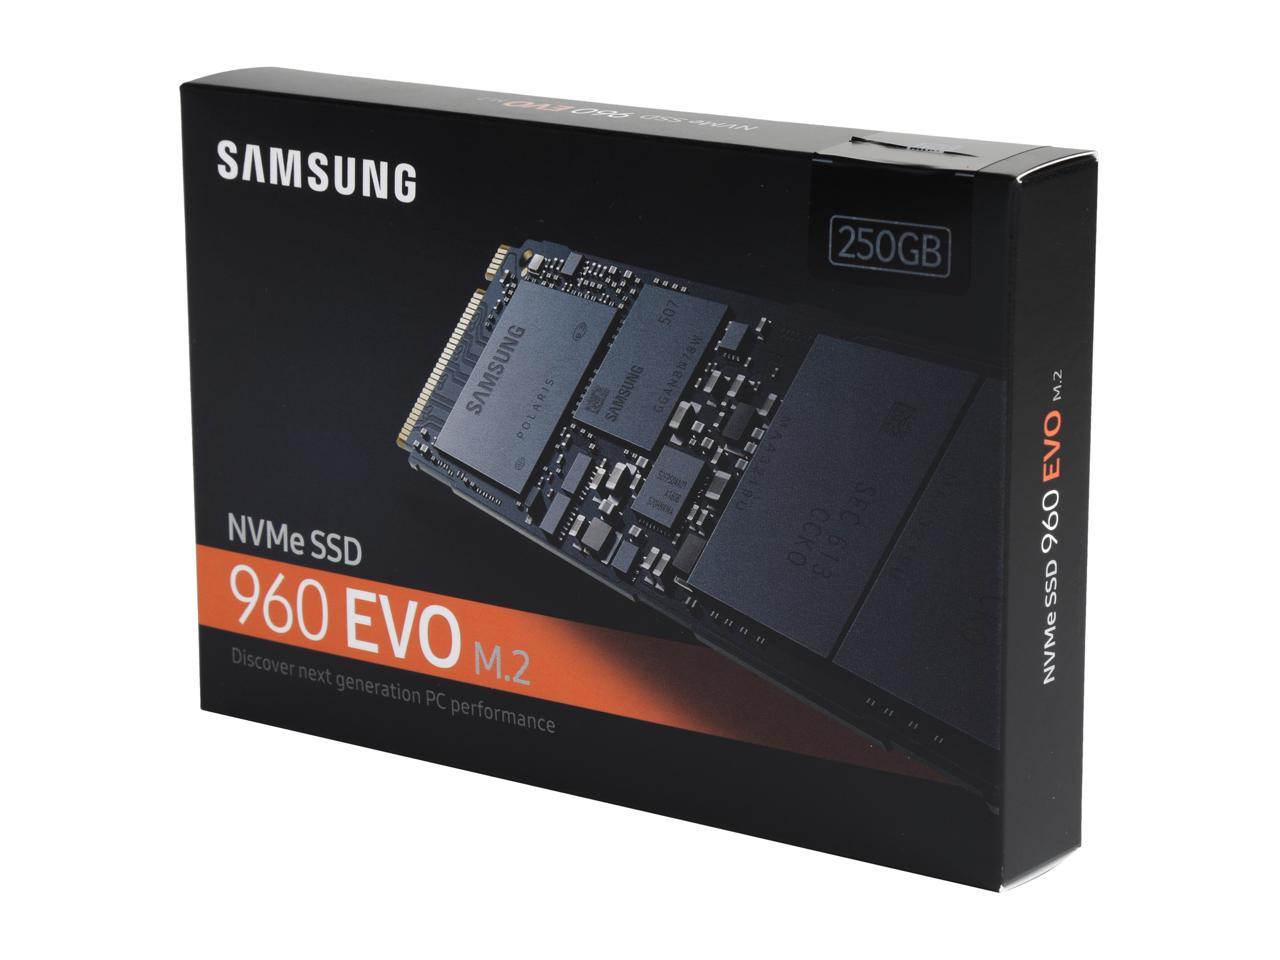 SAMSUNG 960 EVO M.2 250GB NVMe PCI-Express 3.0 x4 Internal Solid State  Drive (SSD) MZ-V6E250BW